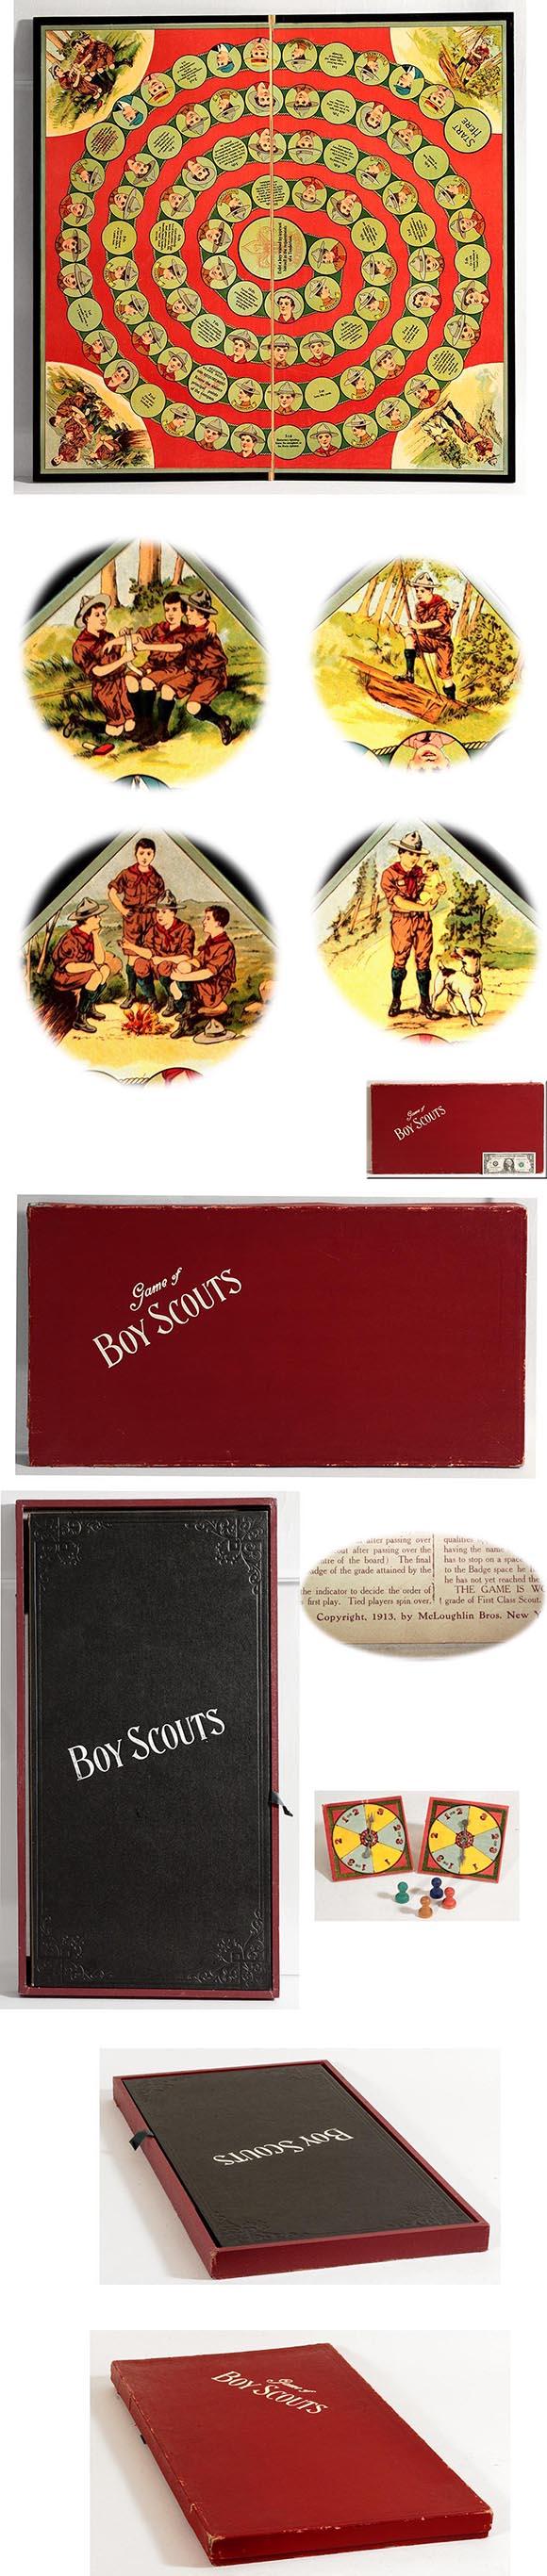 1913 McLoughlin, The Game of Boy Scouts in Original Box